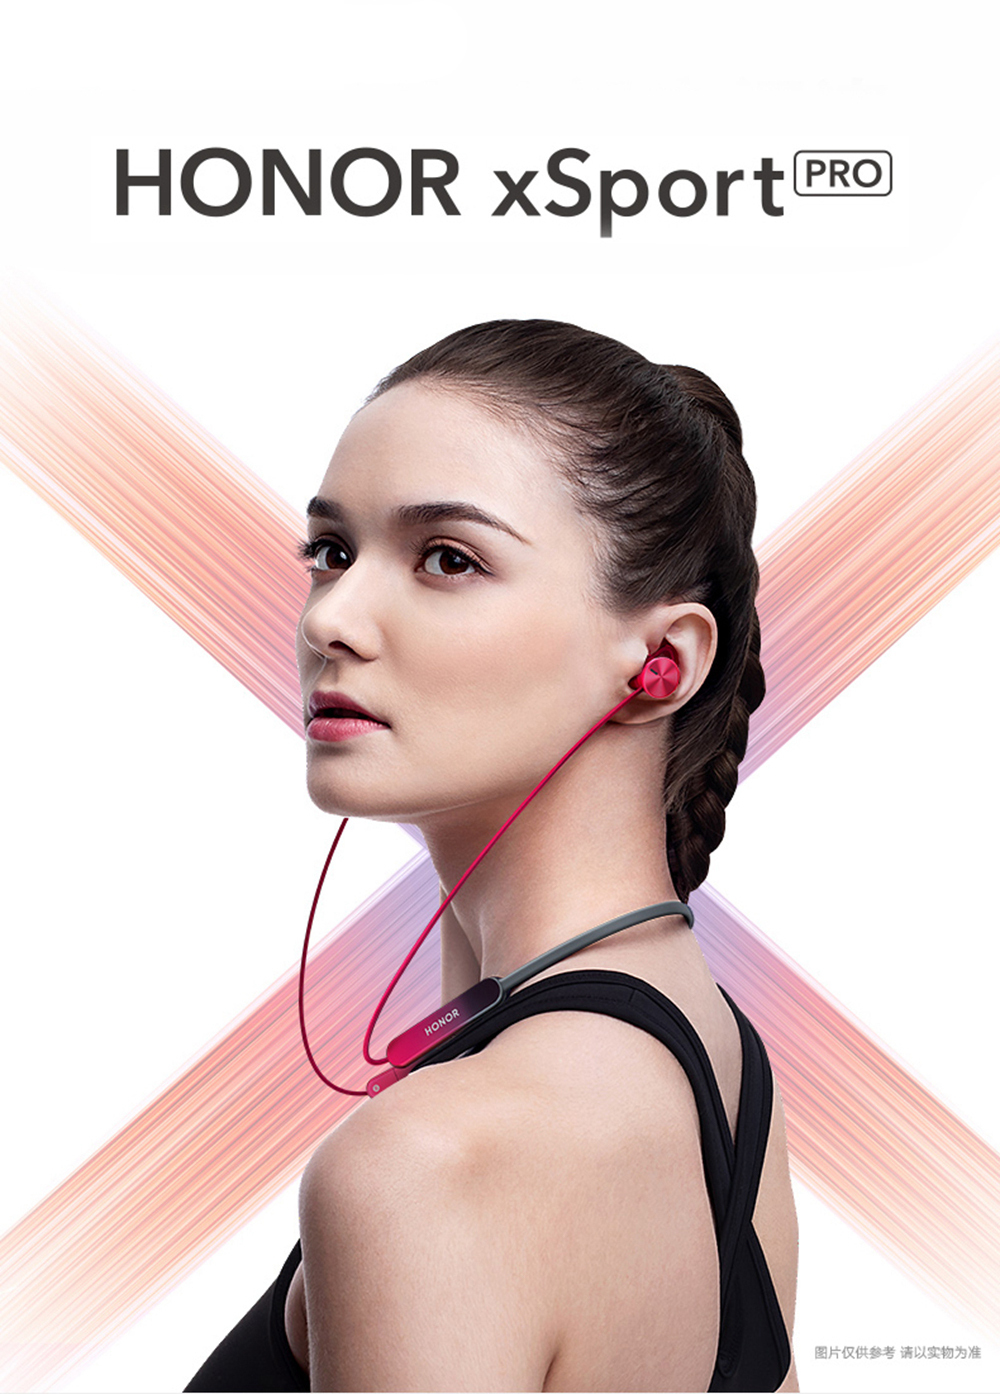 Honor sport pro am66. Huawei Honor Sport Pro am66. Наушники Honor XSPORT Pro. Honor am66 Sport Pro. Беспроводные наушники Honor am66 Sport Pro.